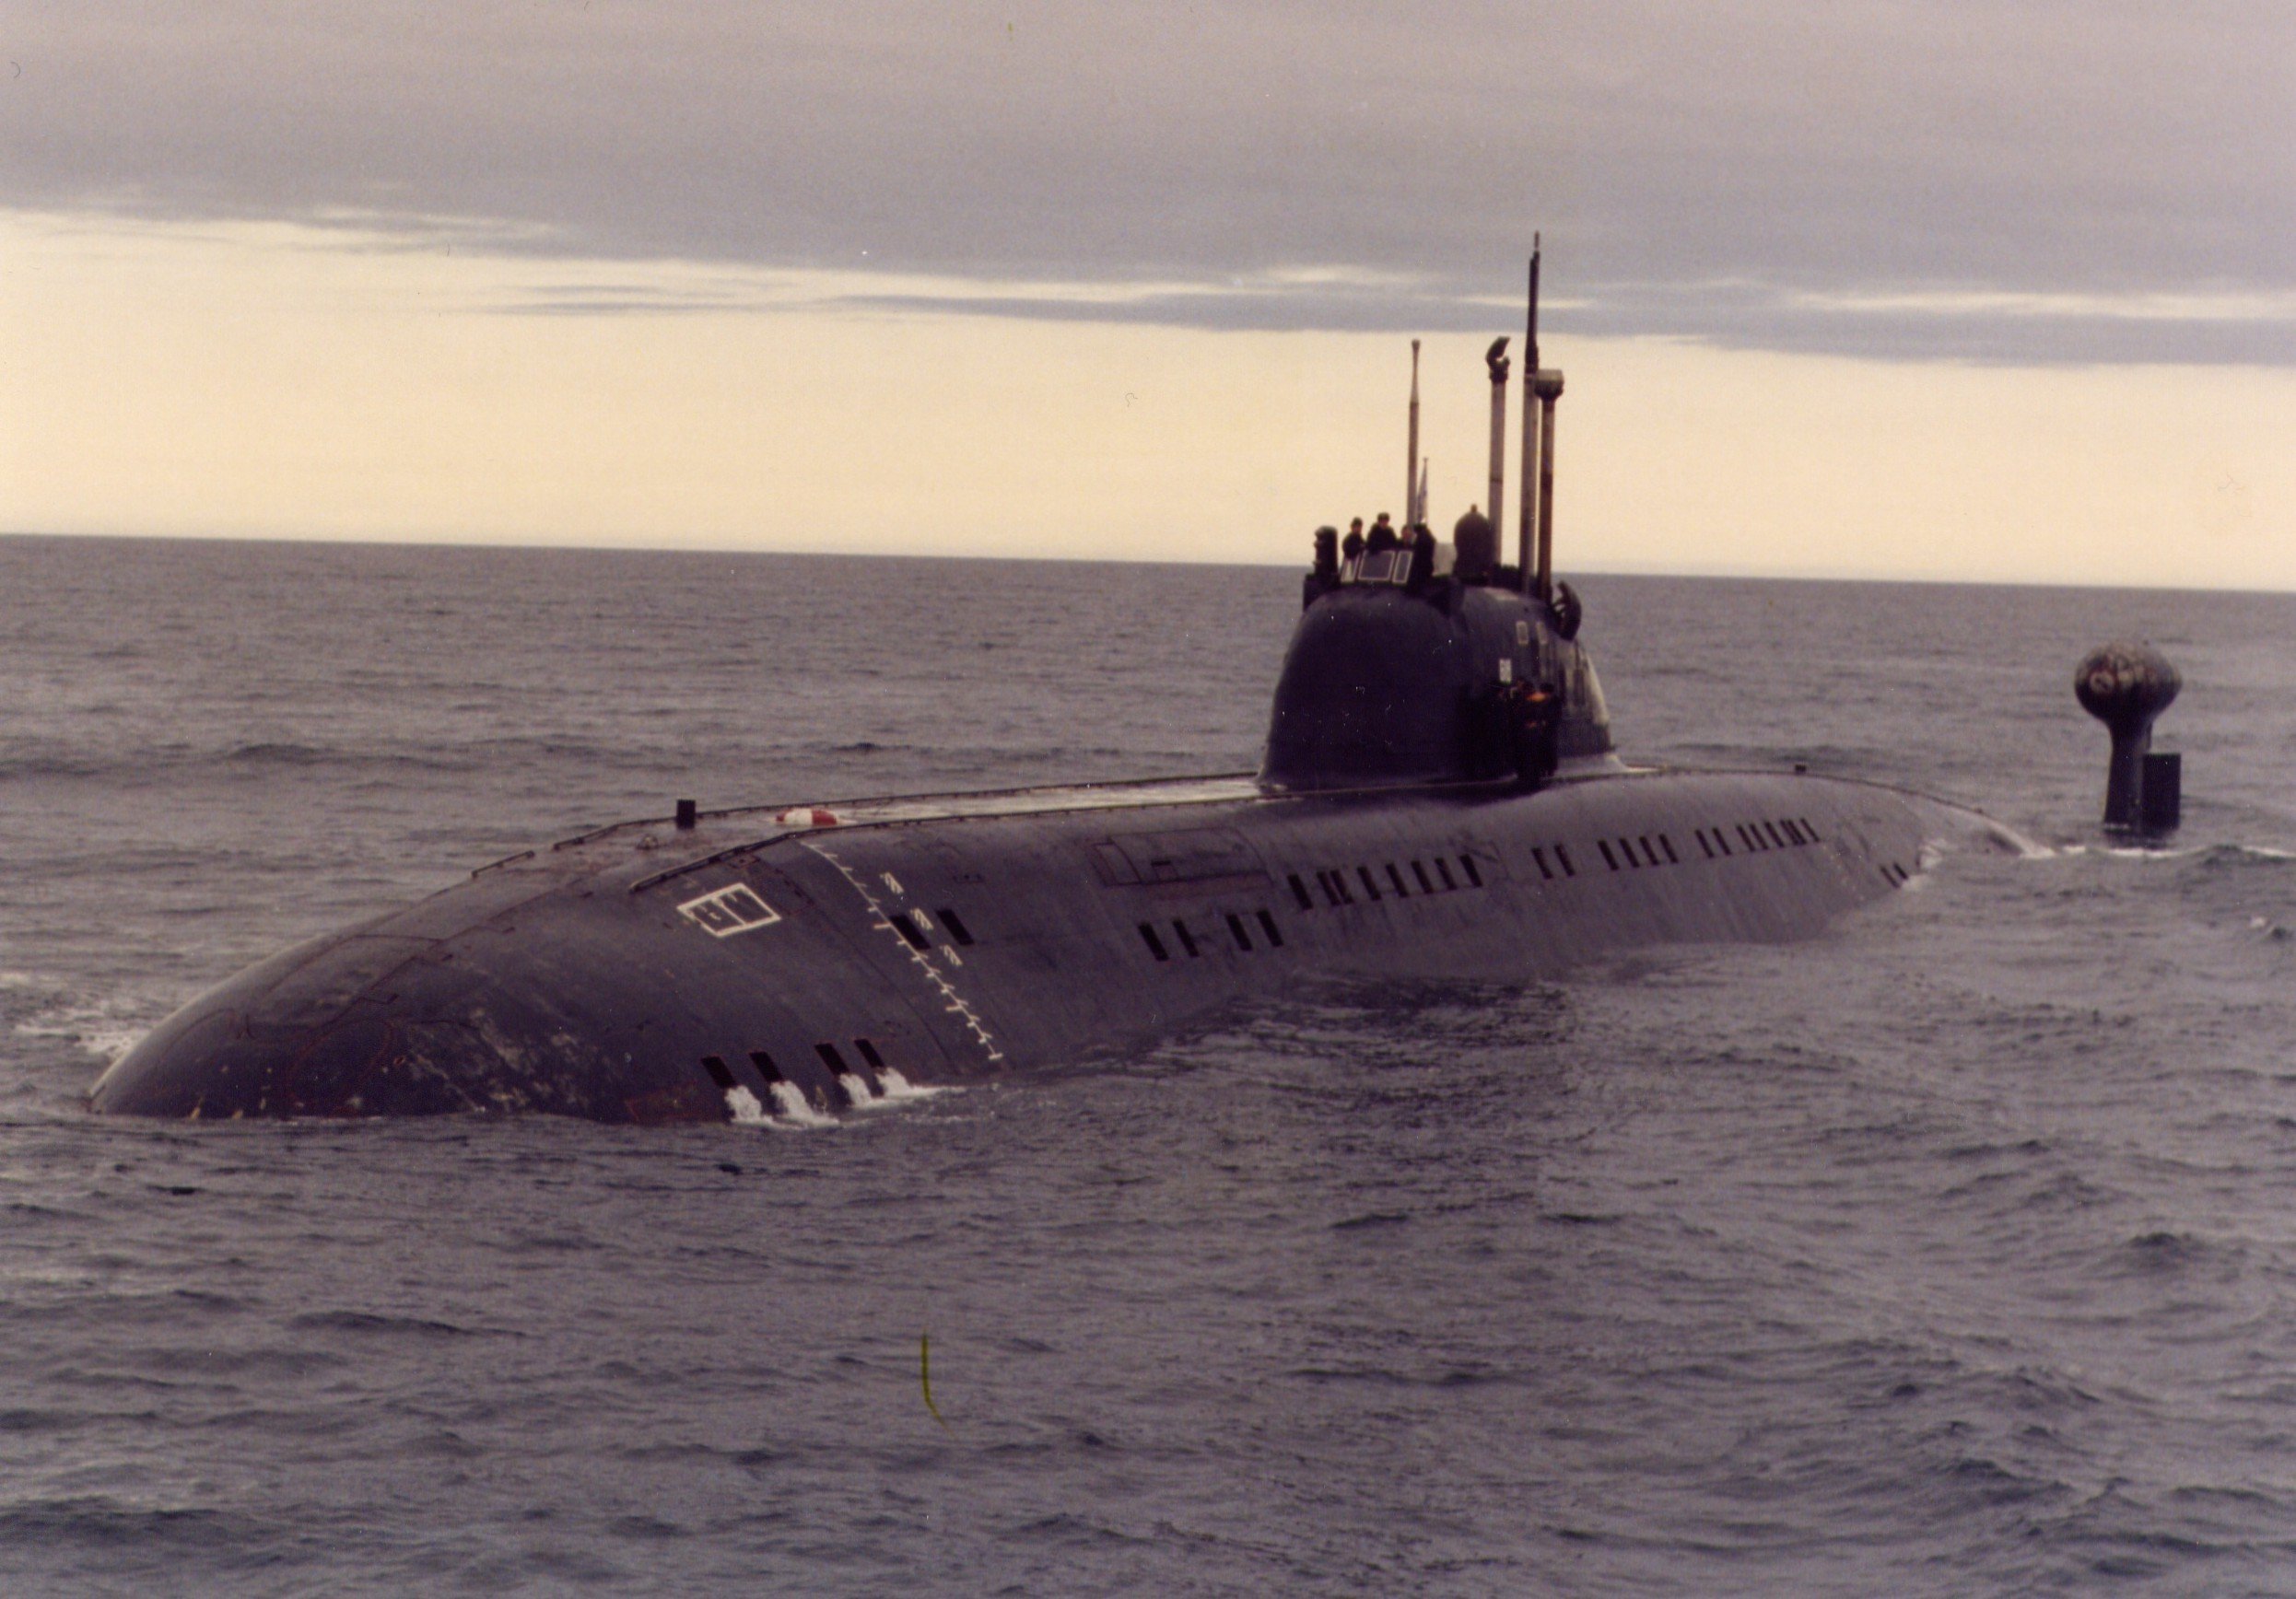 Пл пр т. Подводная лодка 671 РТМК. Проект 671 РТМ подводная лодка. Подводная лодка 671 РТМК щука. АПЛ Обнинск проекта 671ртмк.